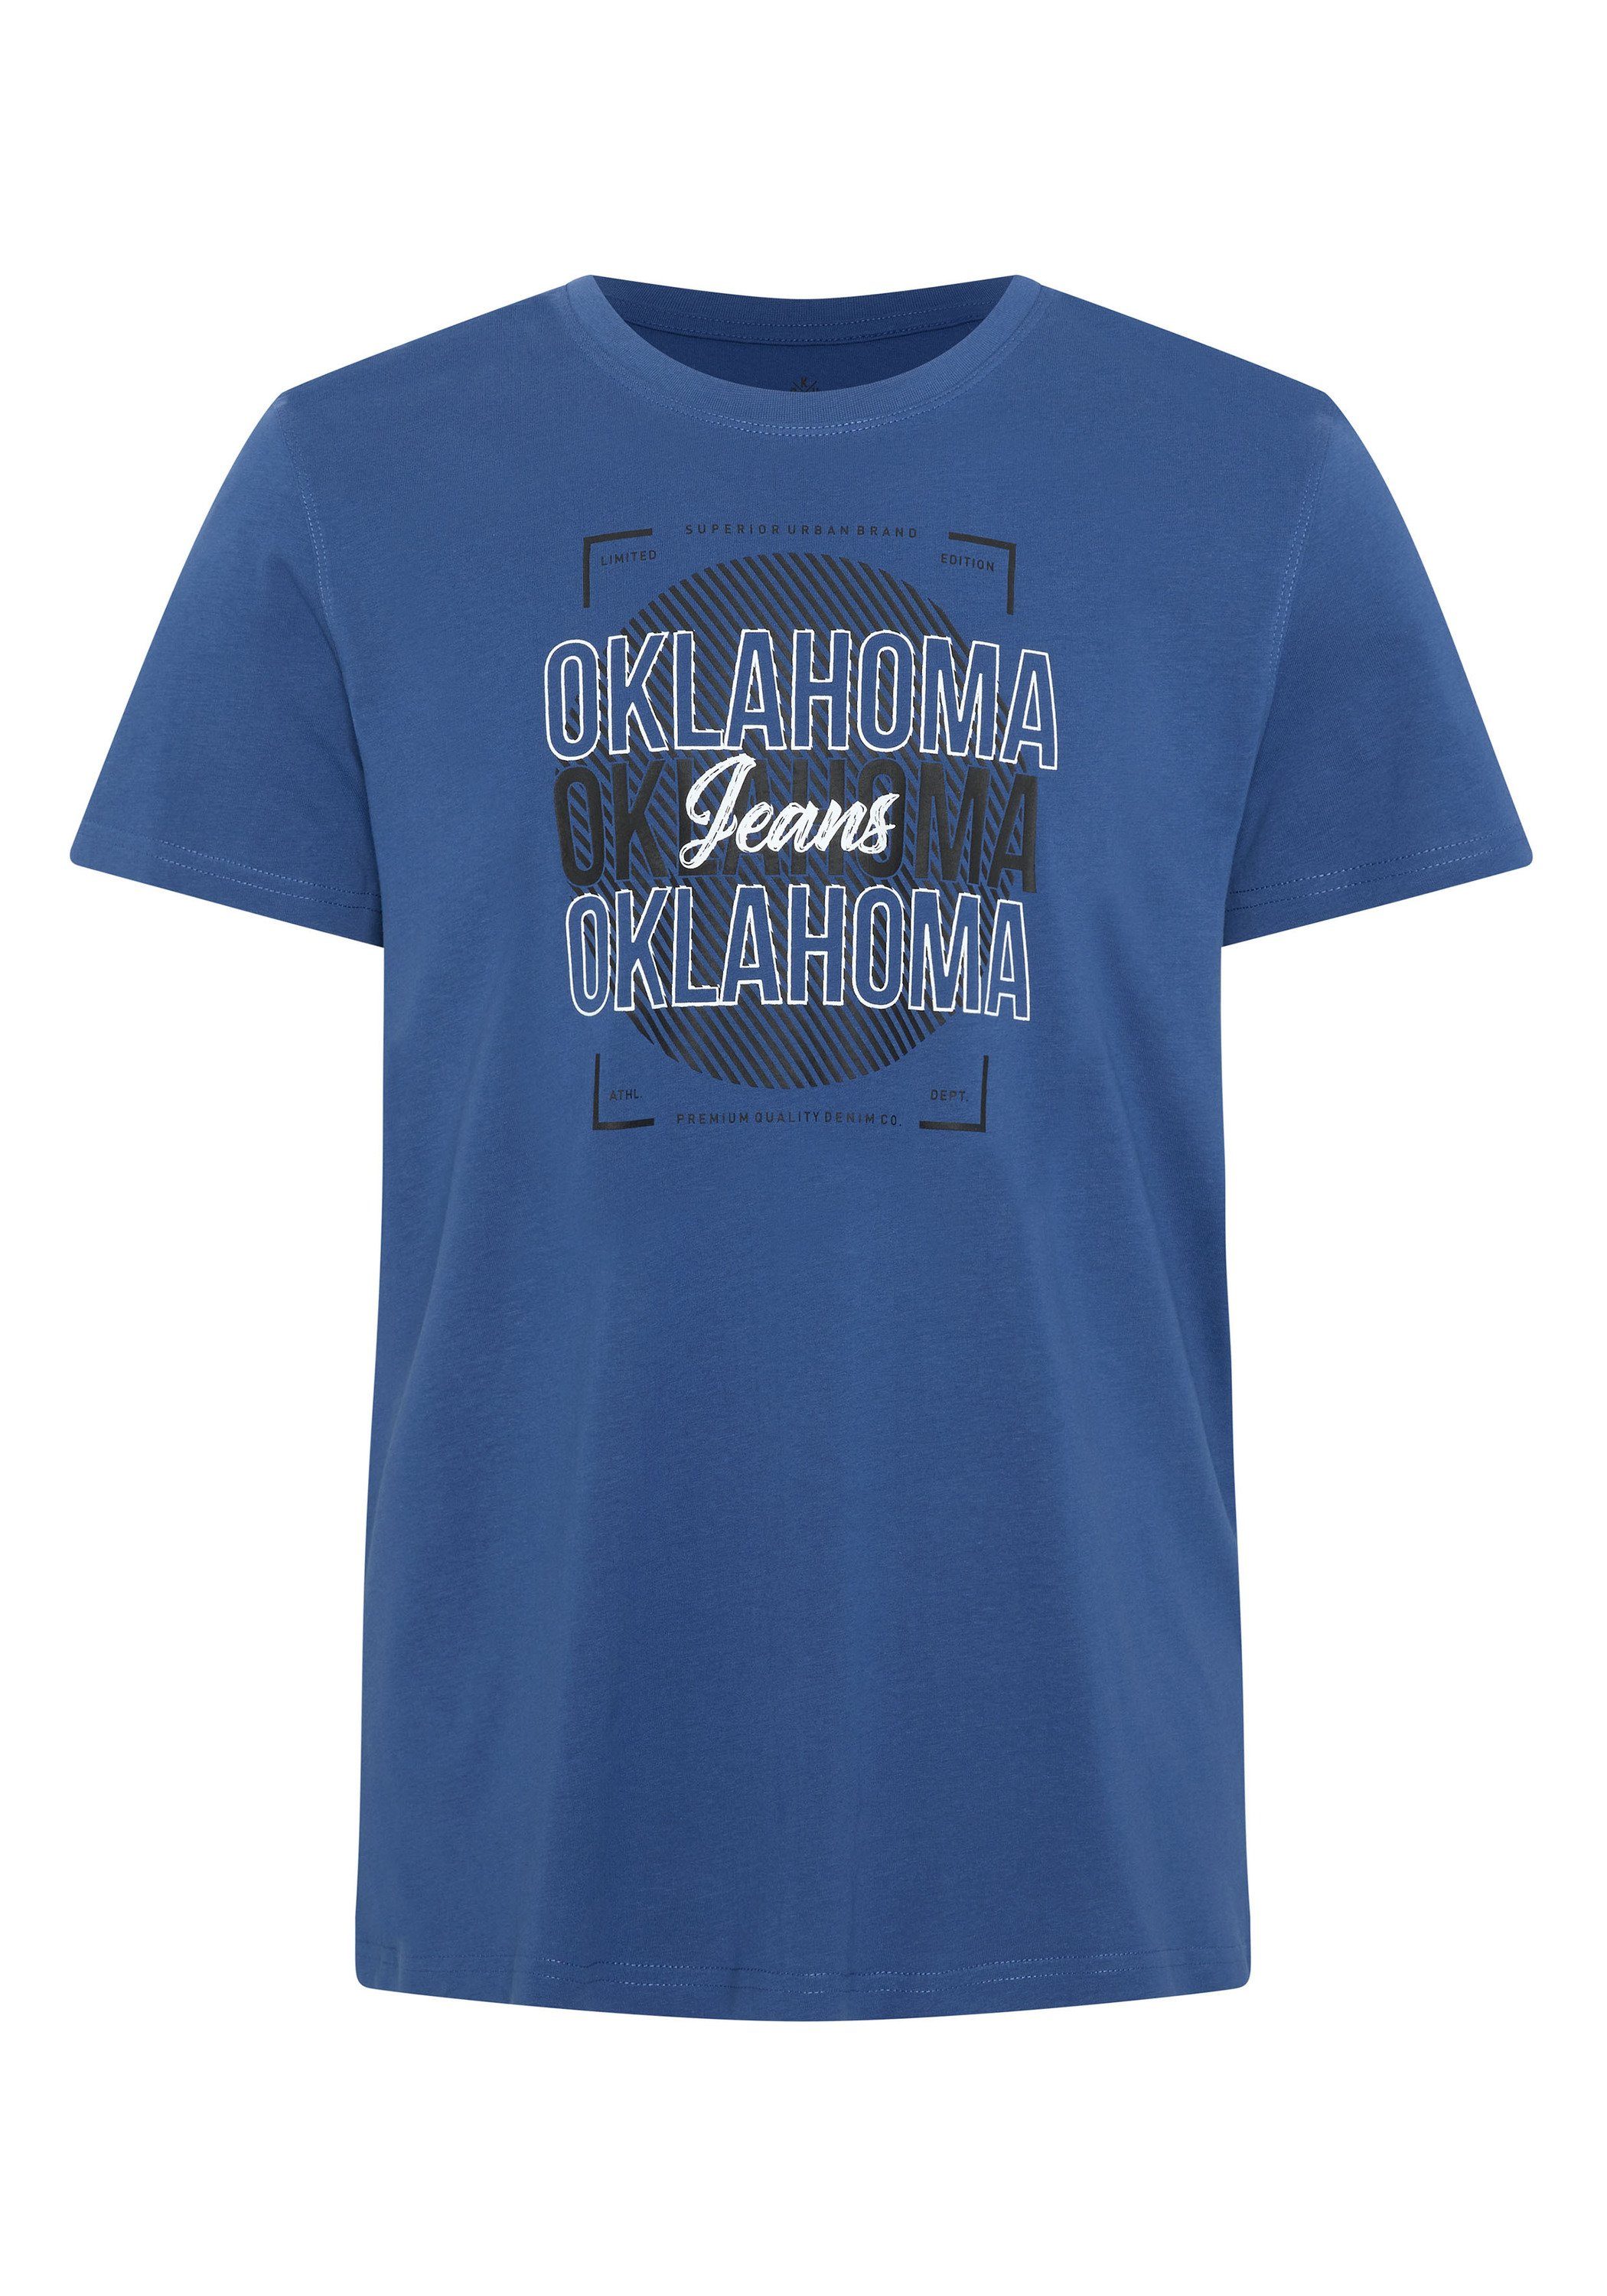 Set Oklahoma Label-Look im neuen Jeans Sail Print-Shirt 19-4042